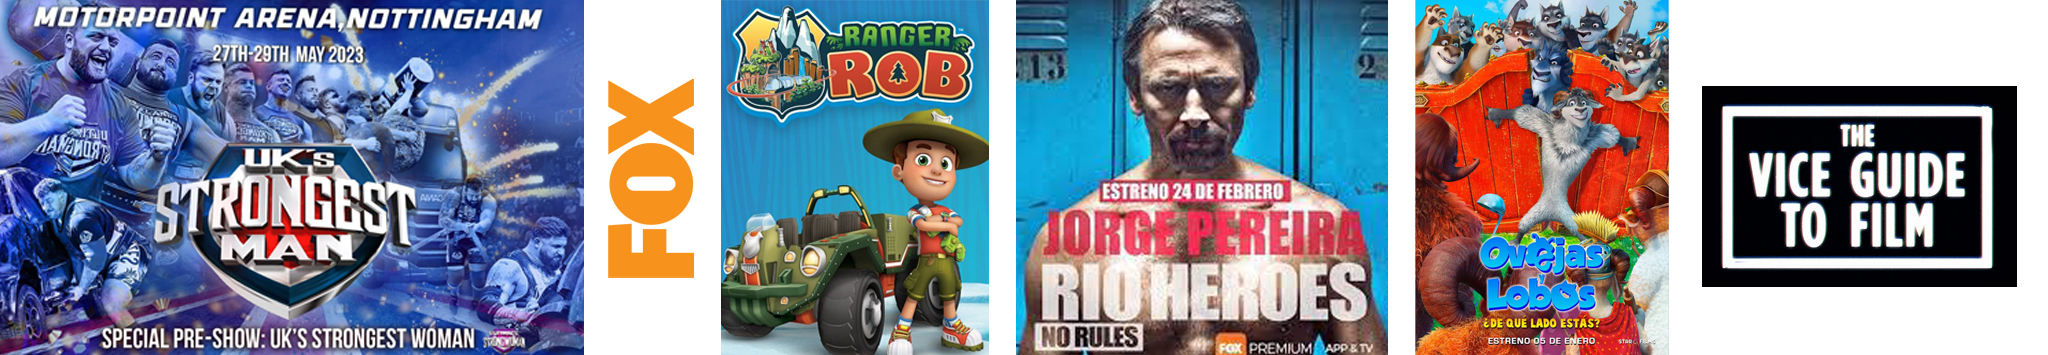 Director de doblaje Cuernavaca Uk Strongest Man, Fox, Ranger Rob, Jorge Pereira Rio Heroes, Ovejas y Lobos, The Vice Guide to Film